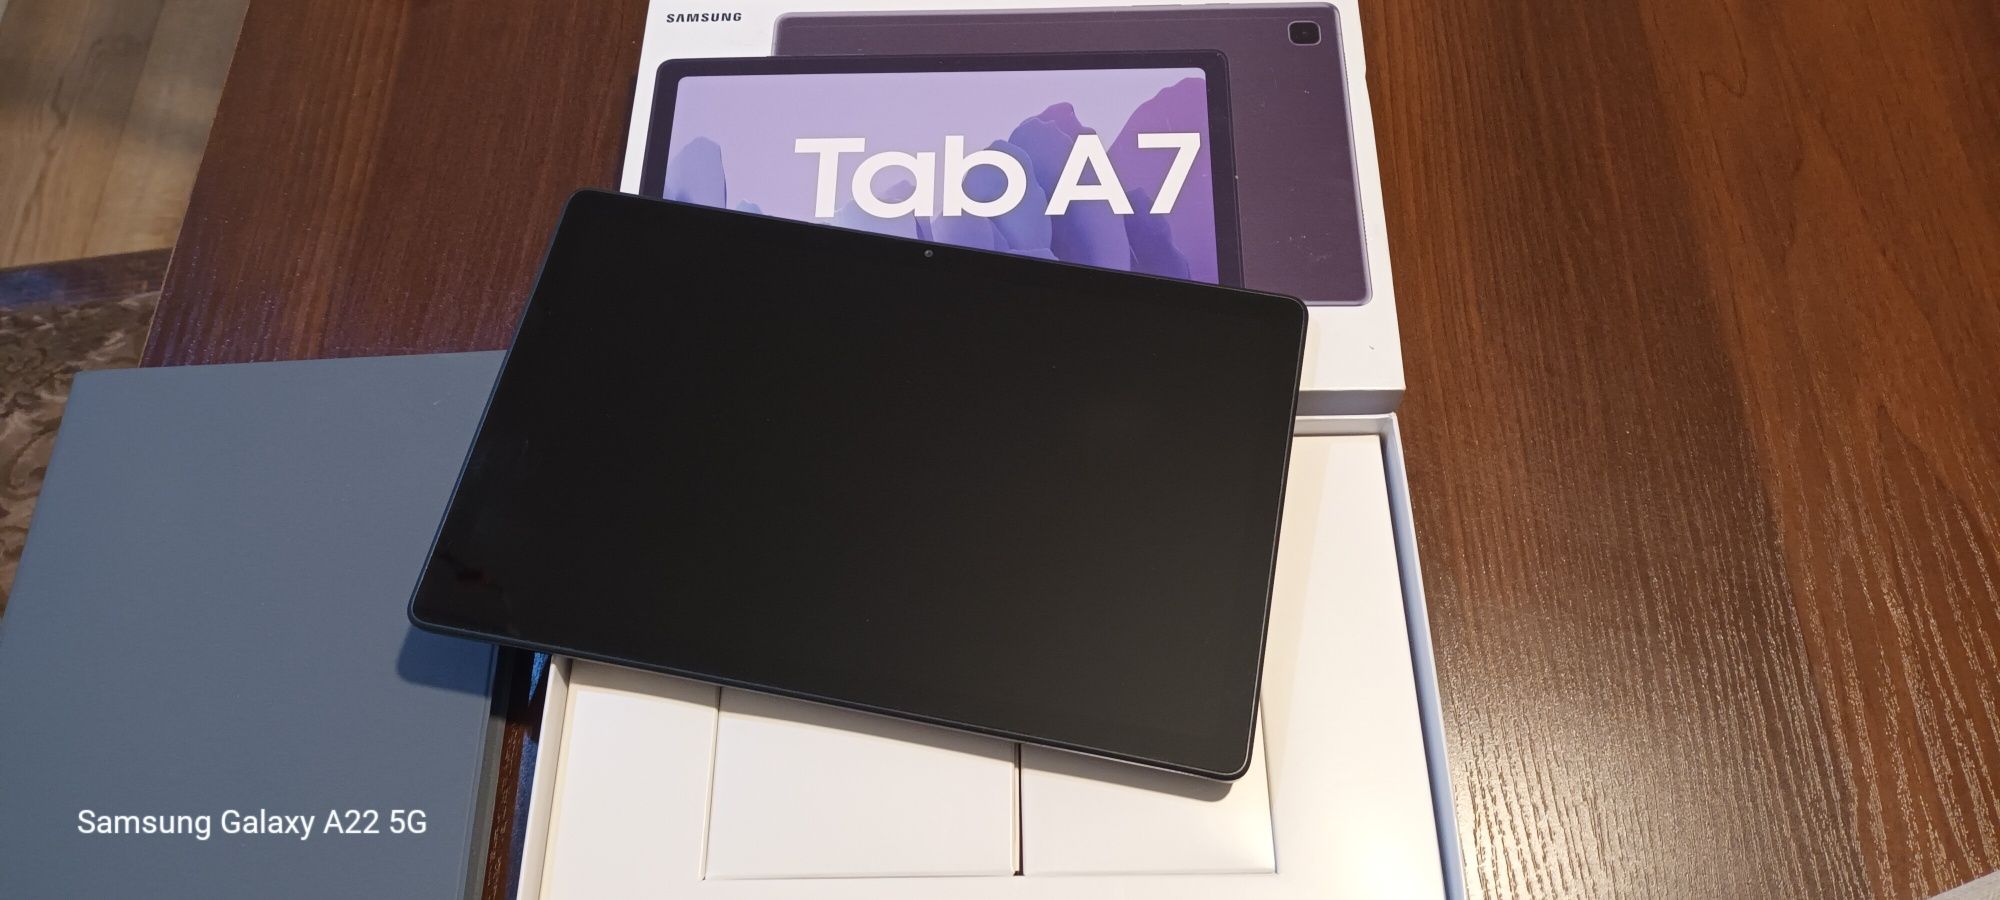 Sprzedam tablet Samsung A7 model T505